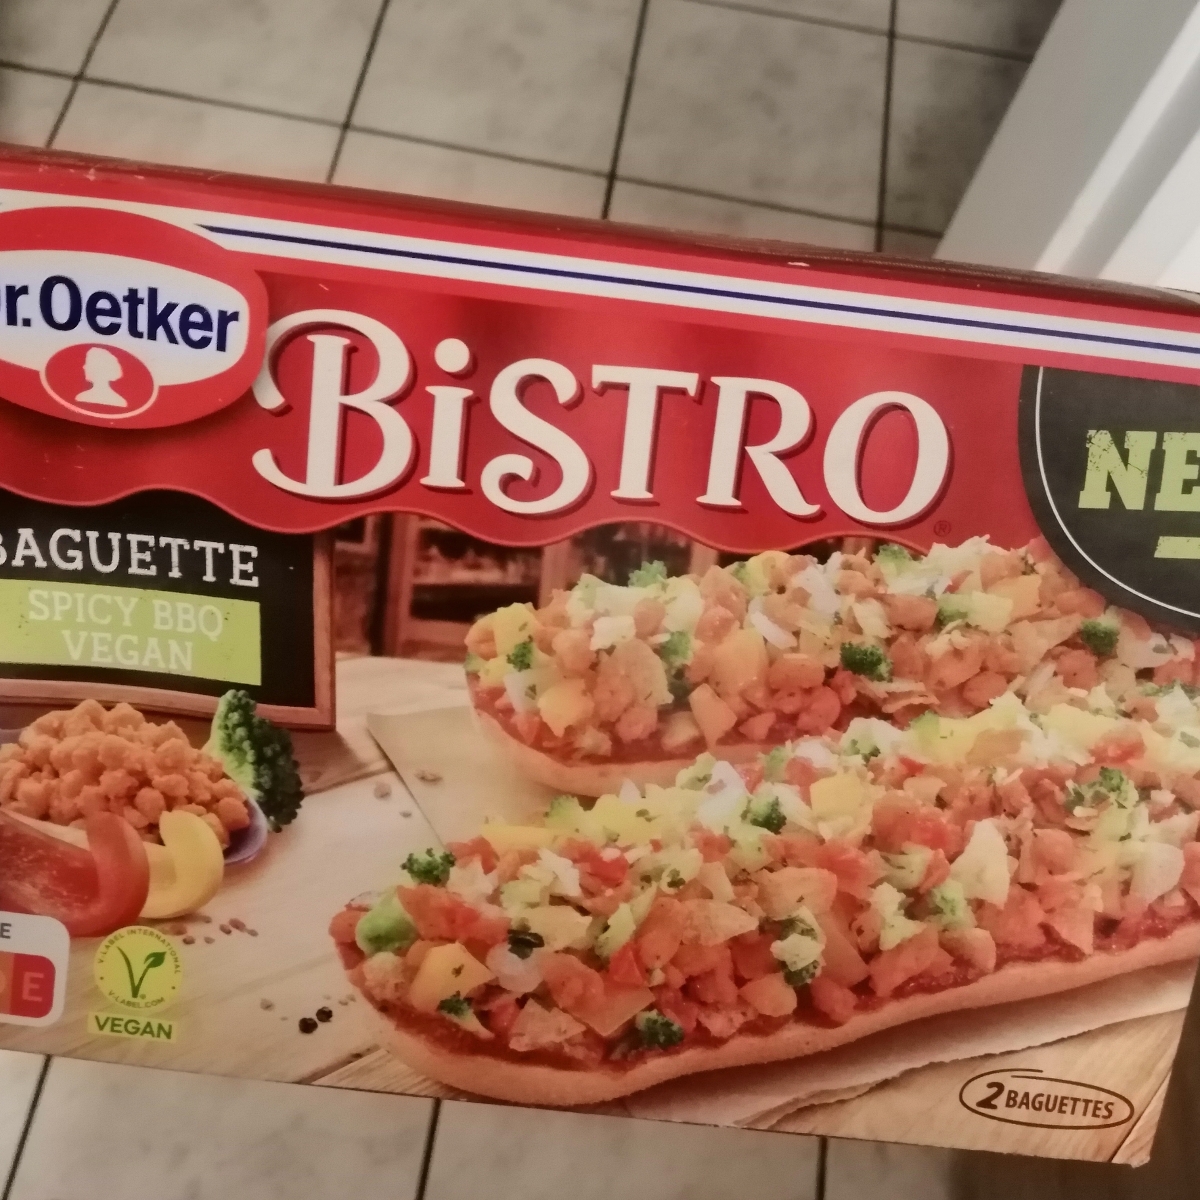 Dr. Oetker Bistro Baguette Spicy BBQ Vegan Review | abillion | 